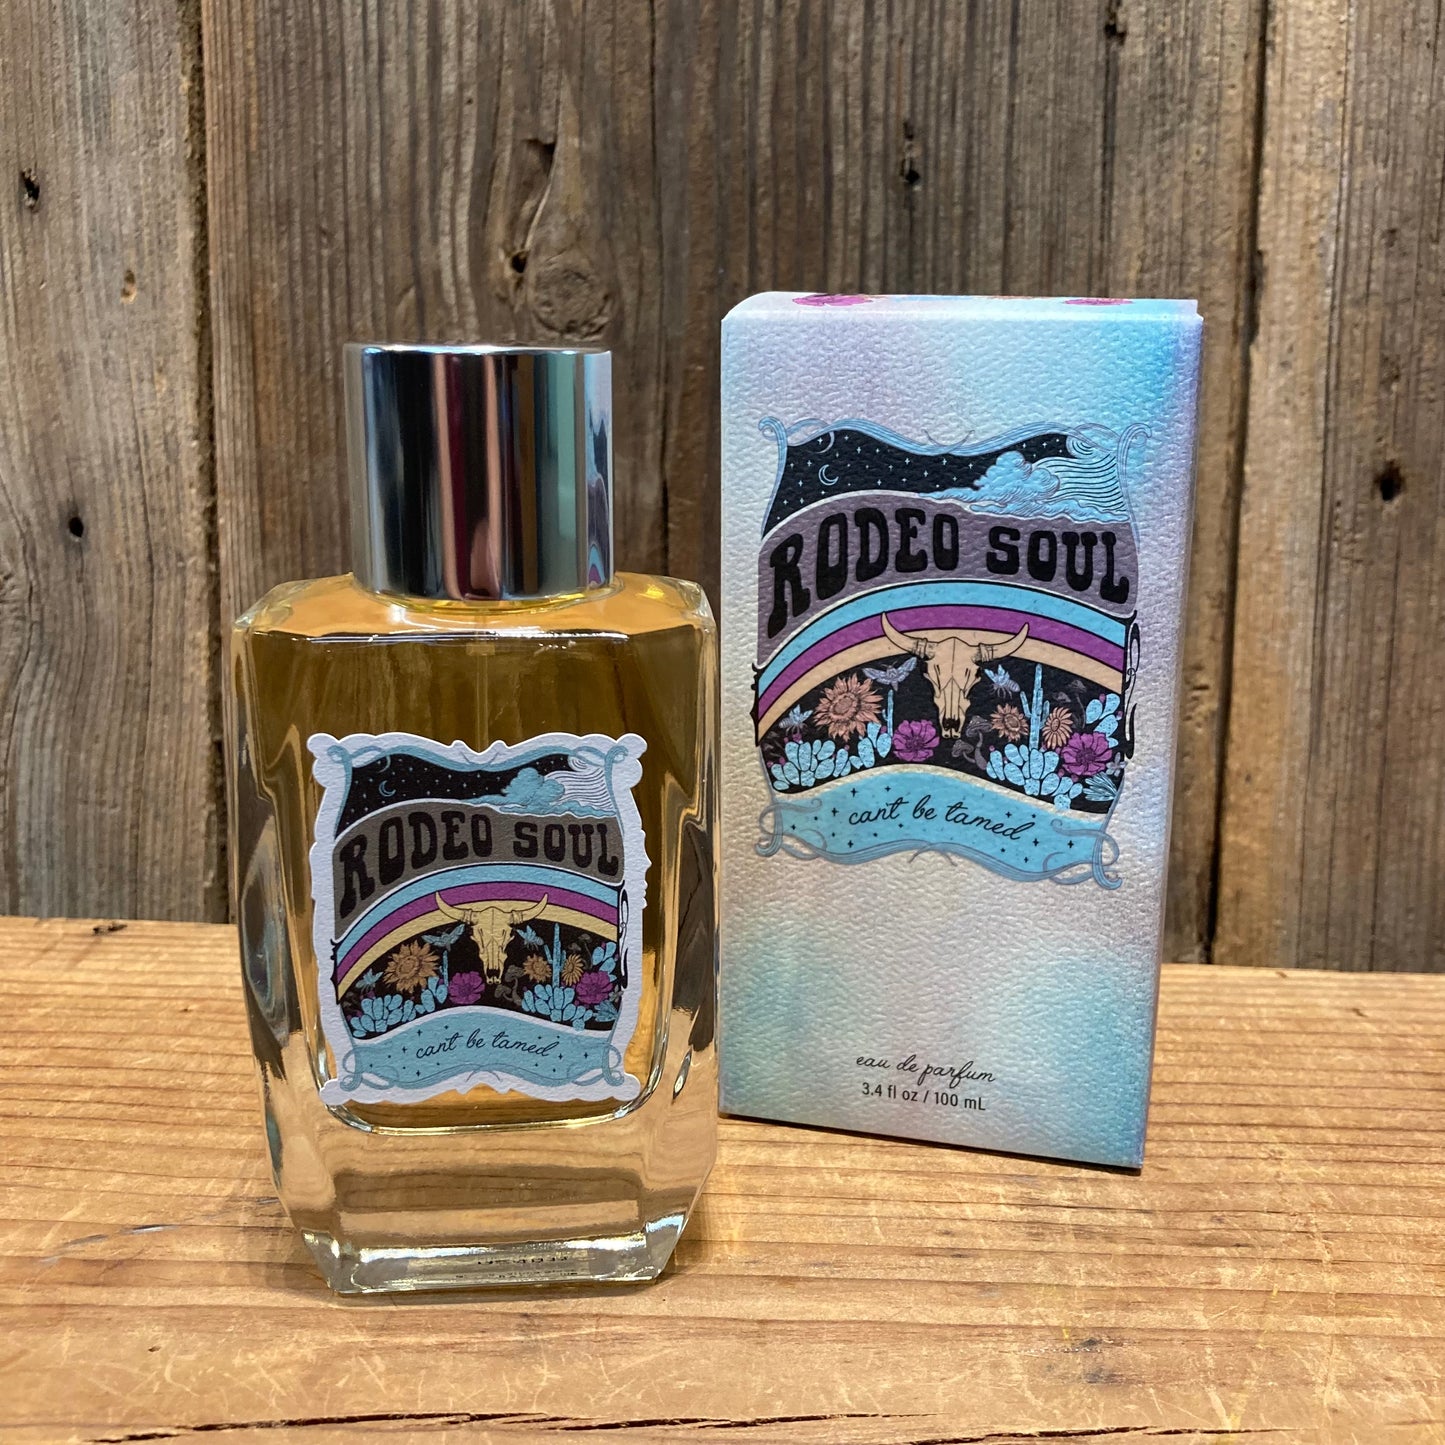 Rodeo Soul Perfume